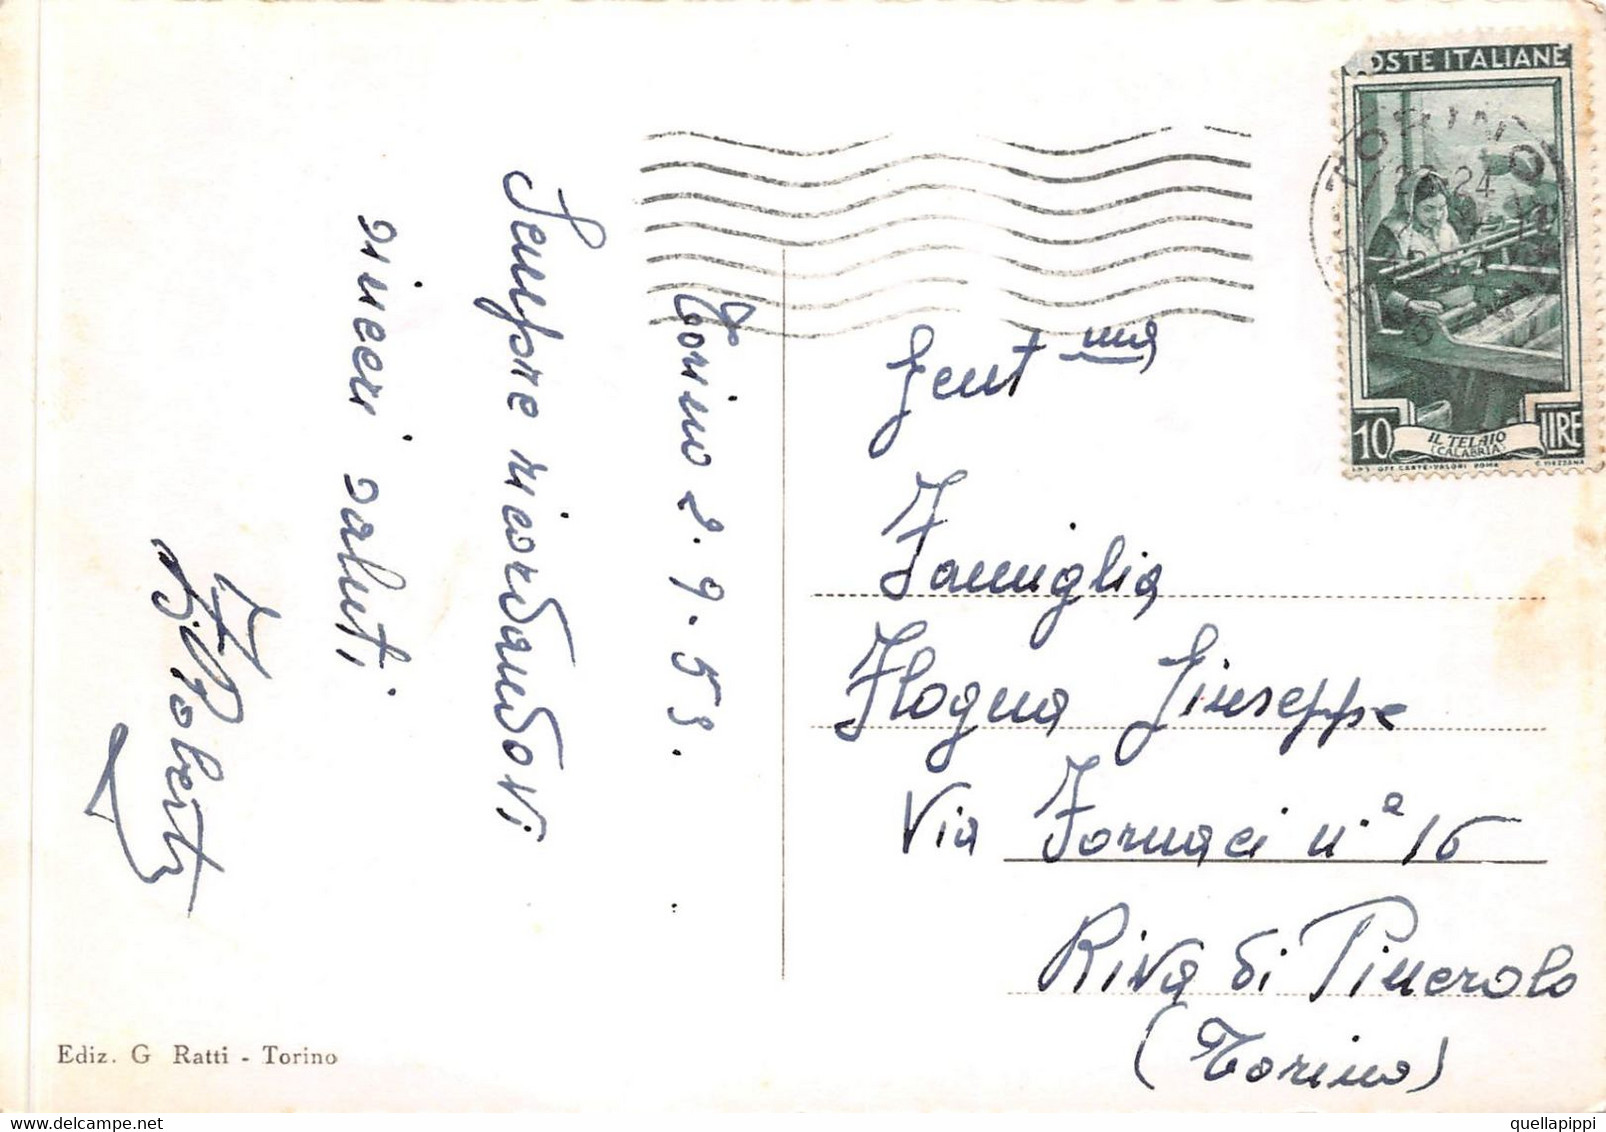 014287 "TORINO - PIAZZA E MONUMENTO A GIUSEPPE MAZZINI" ANIMATA, AUTO ANNI '50. CART  SPED 1953 - Plaatsen & Squares